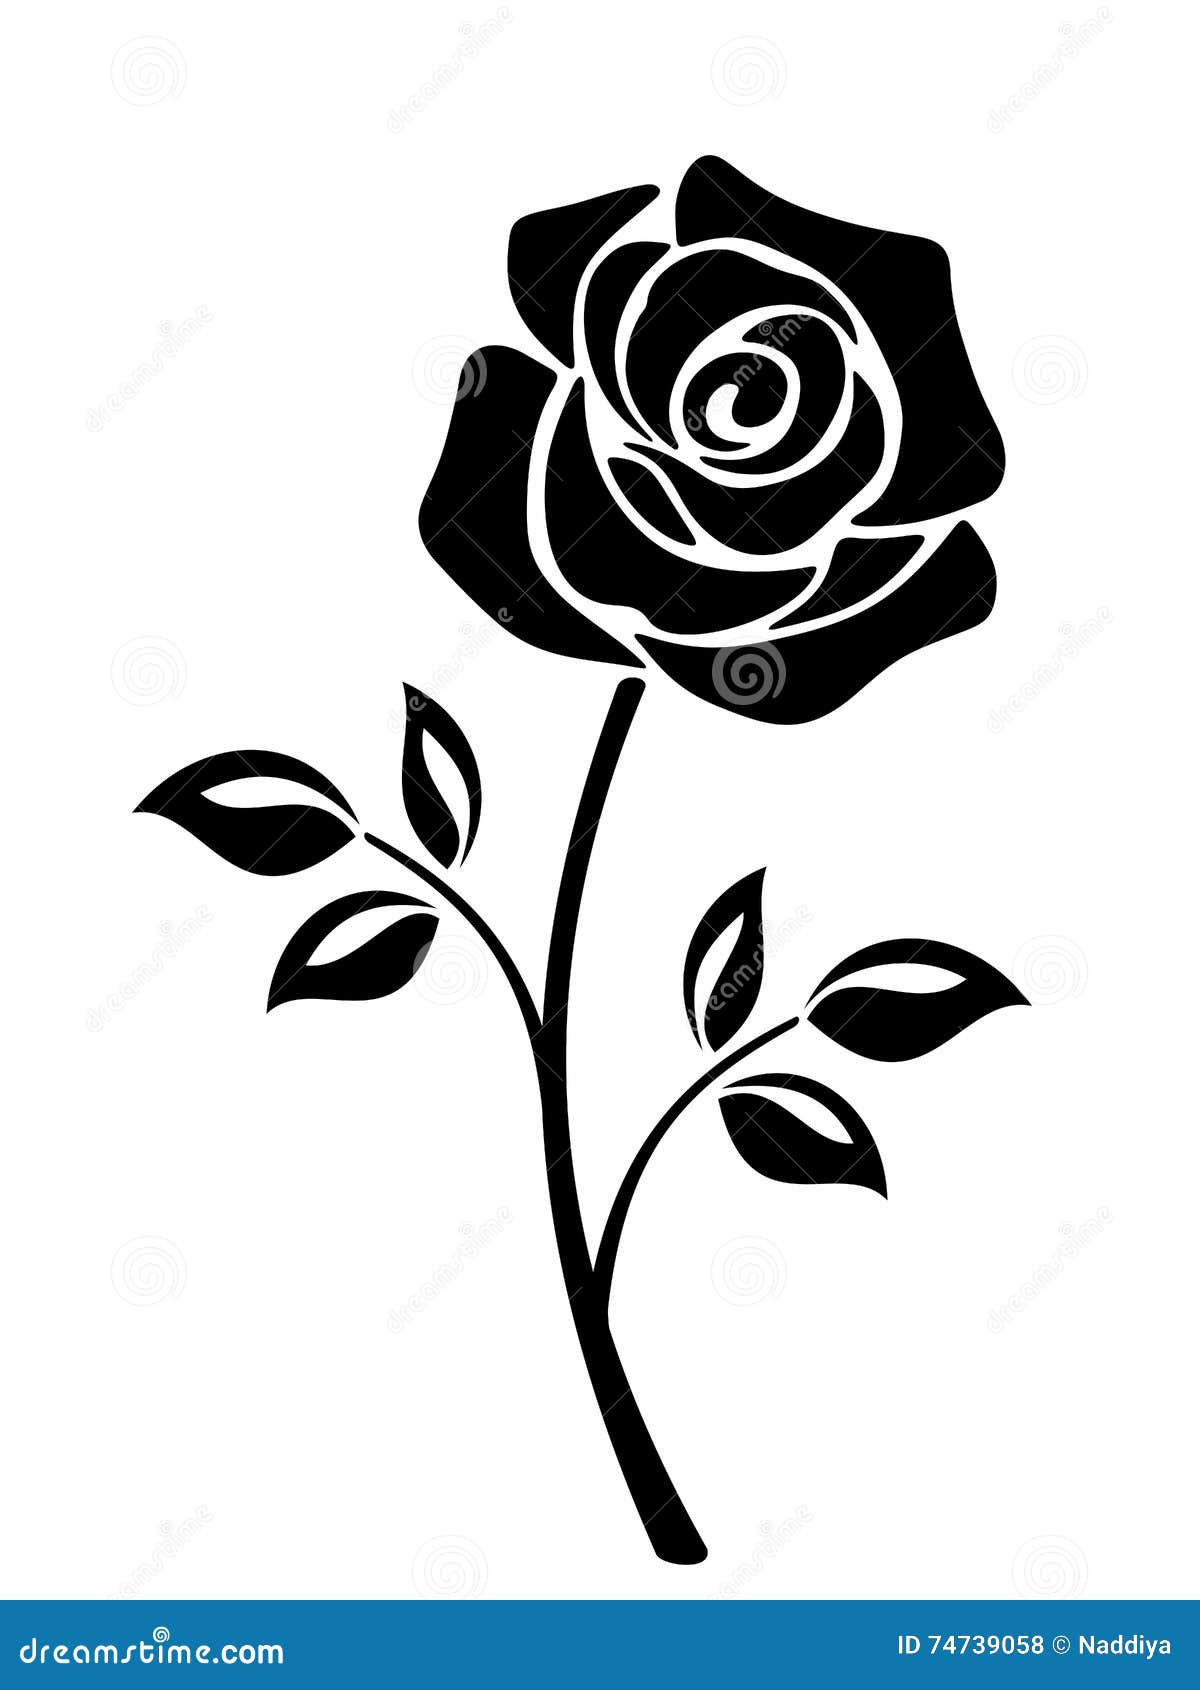 Black Silhouette of a Rose Flower. Vector Illustrations. Stock Vector ...